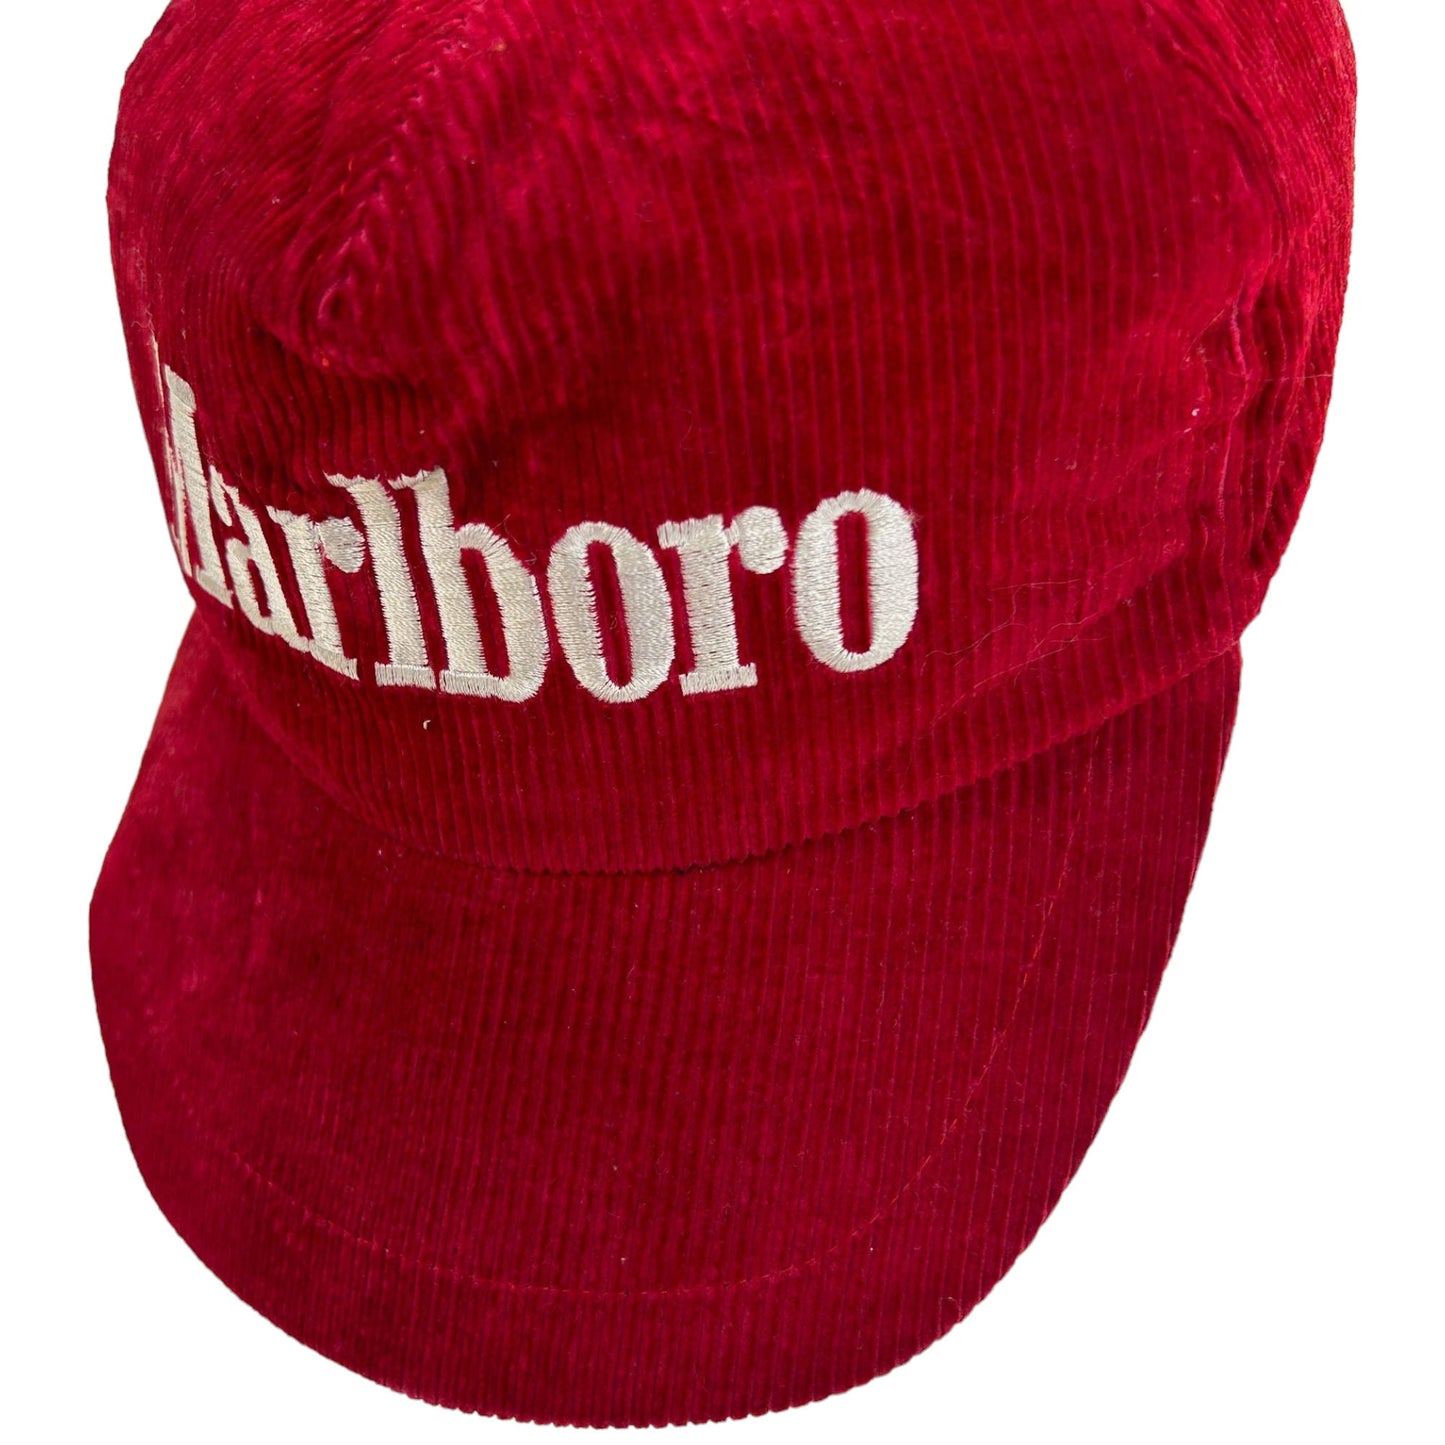 Vintage Marlboro Corduroy Hat Streetwear